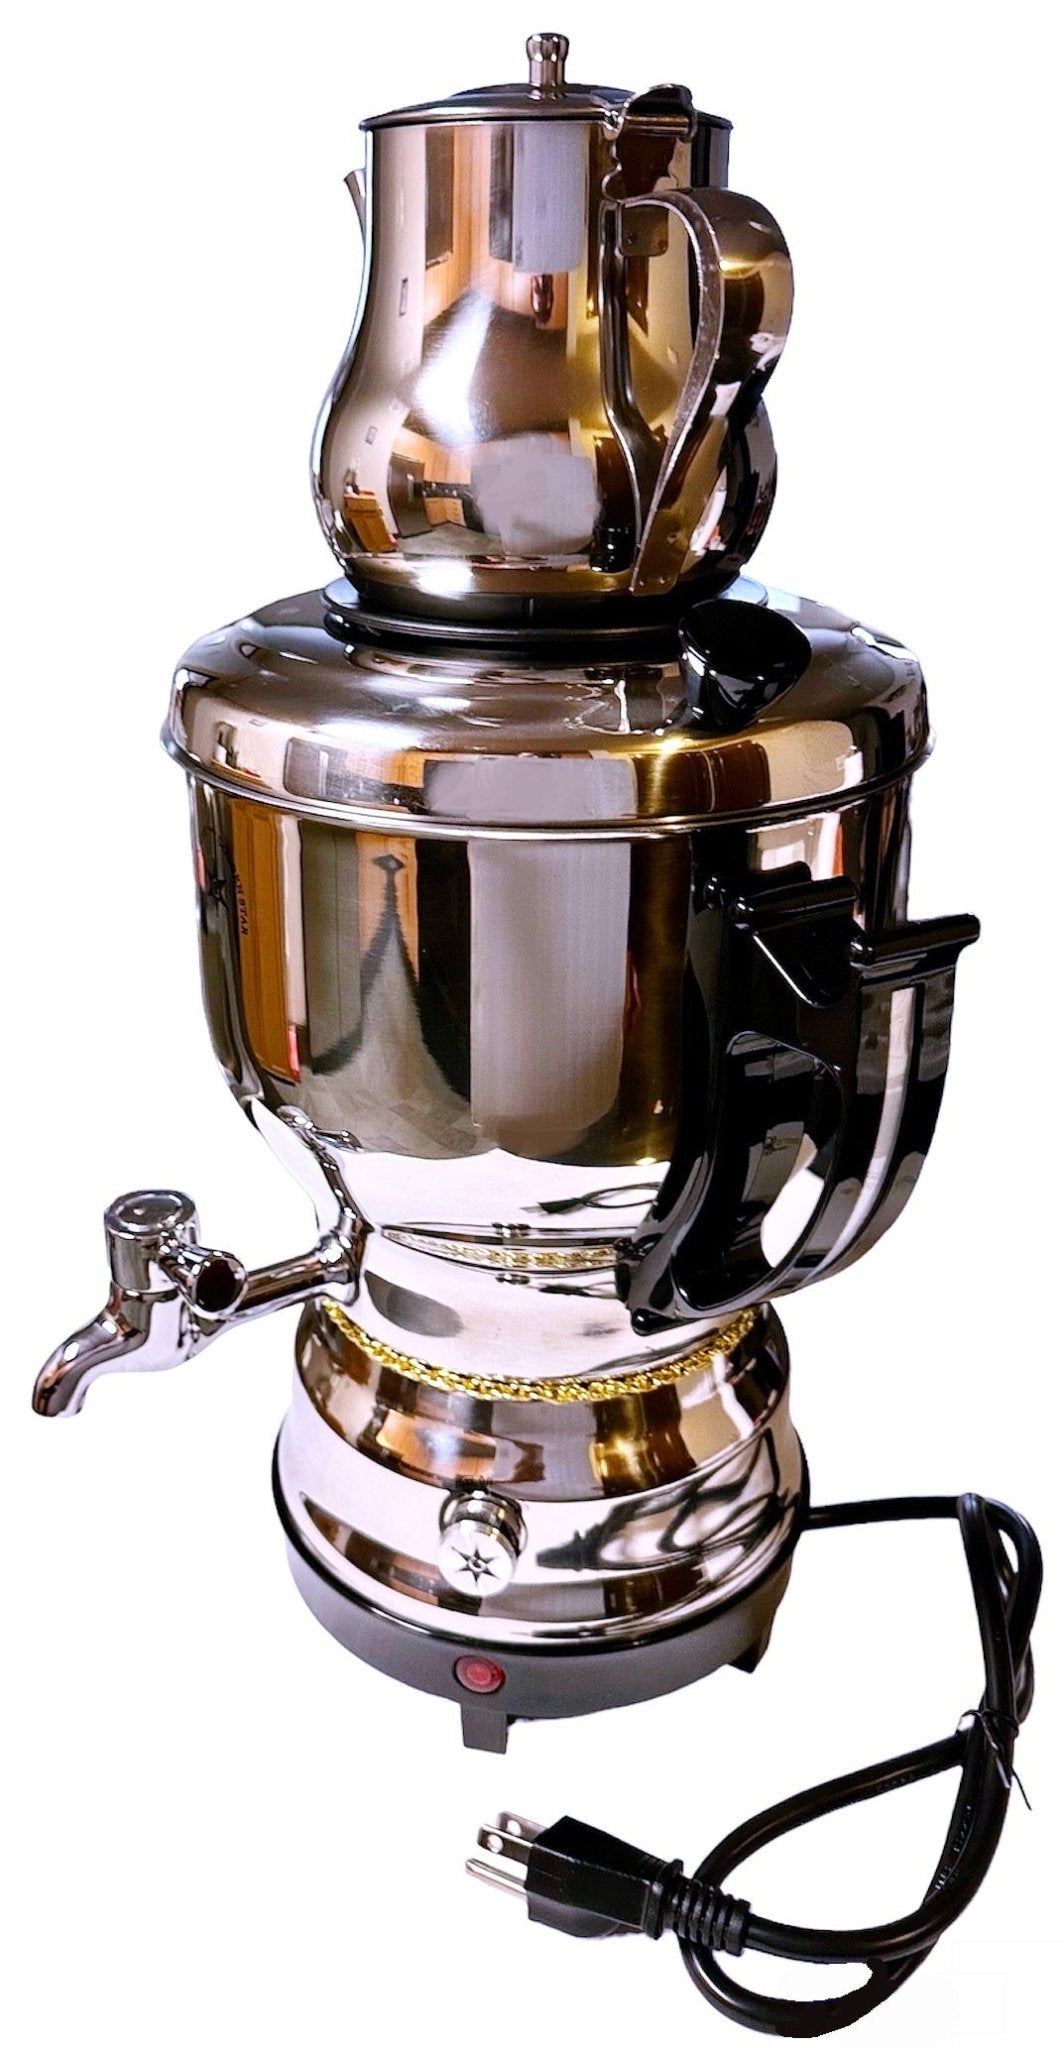 Fancy Electric Glass Tea Maker and Teapot With LED Light (Samovar, Samavar)